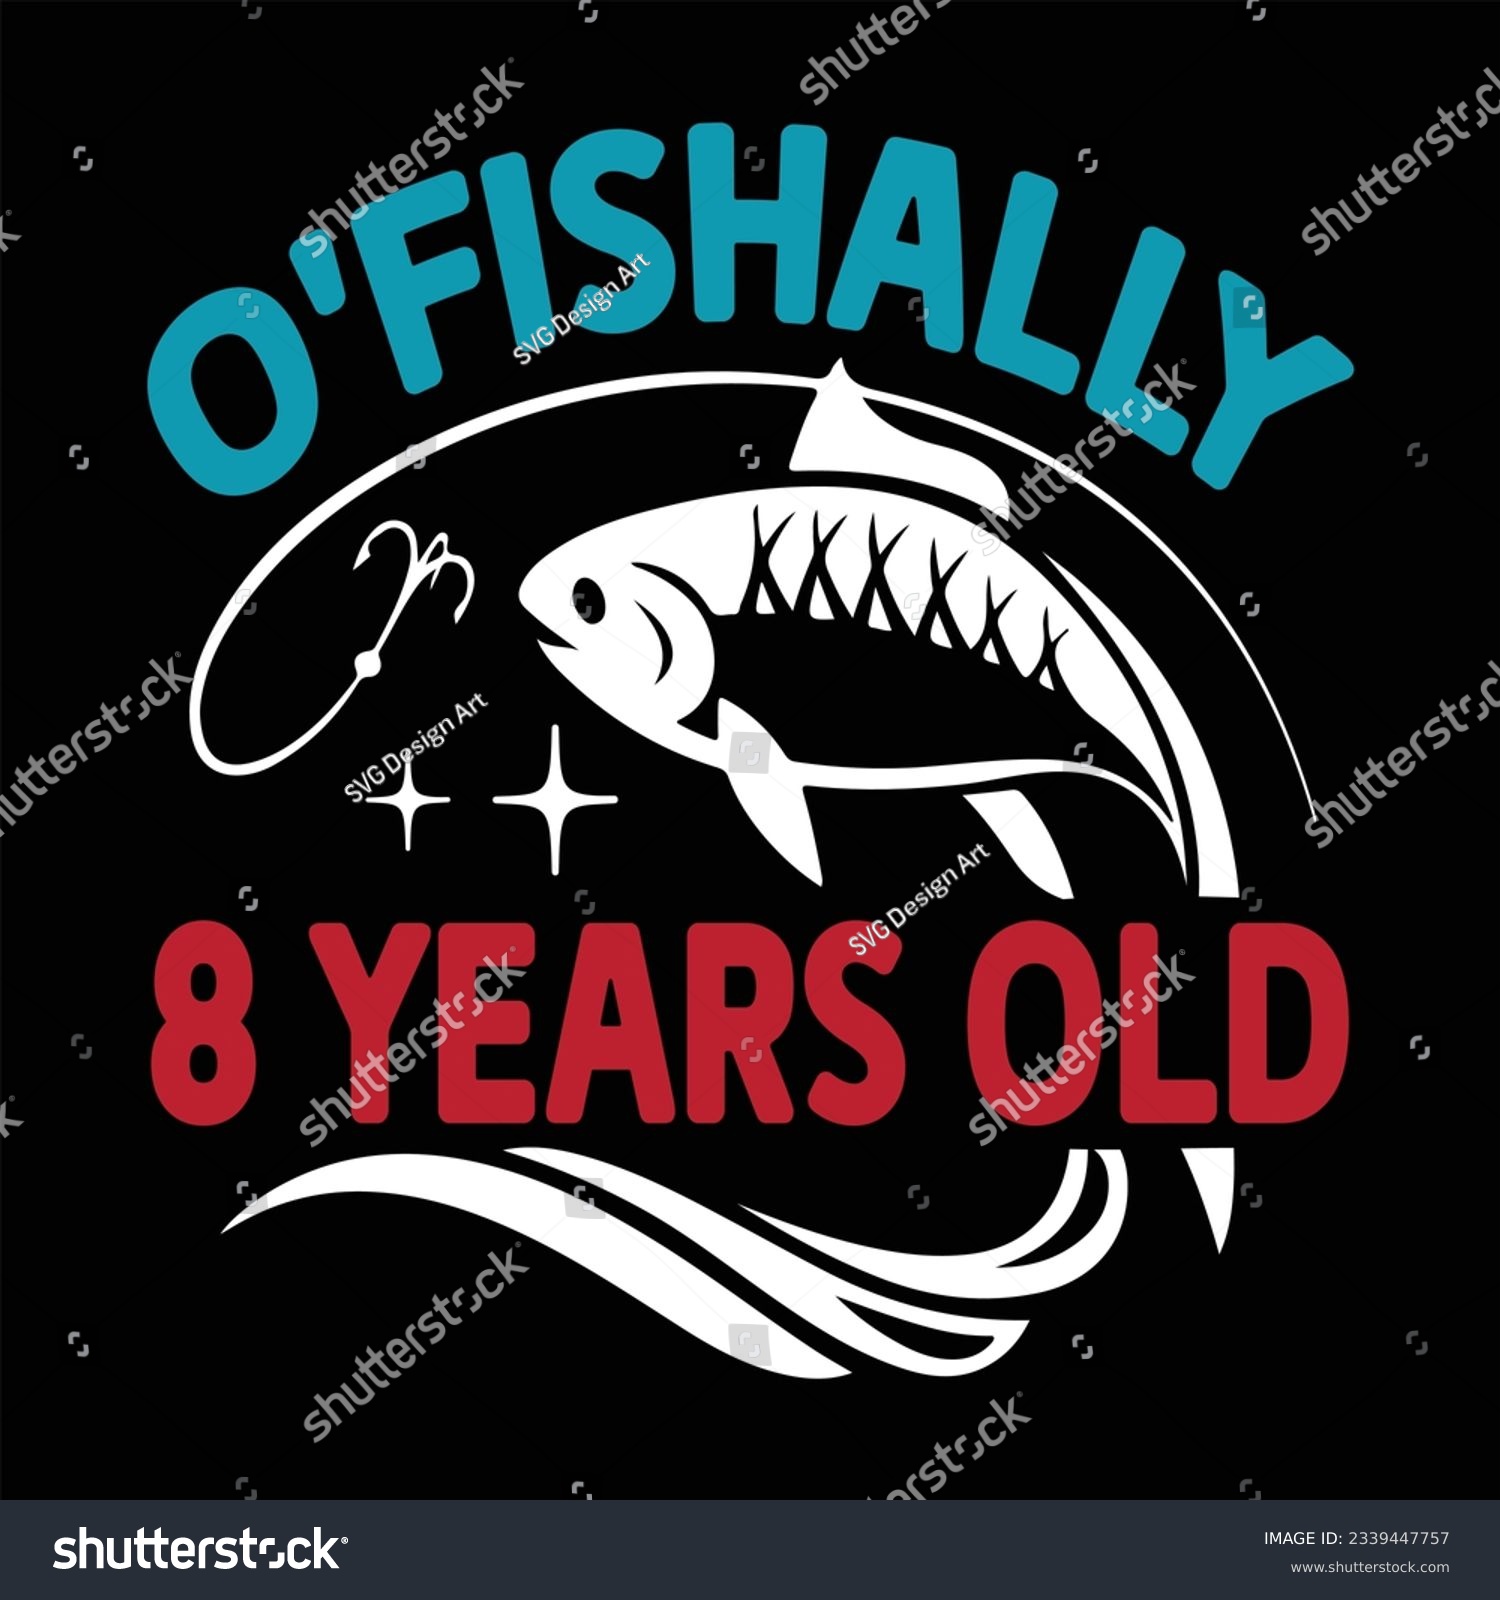 SVG of O'Fishally 8 Years Old Funny Birthday svg svg